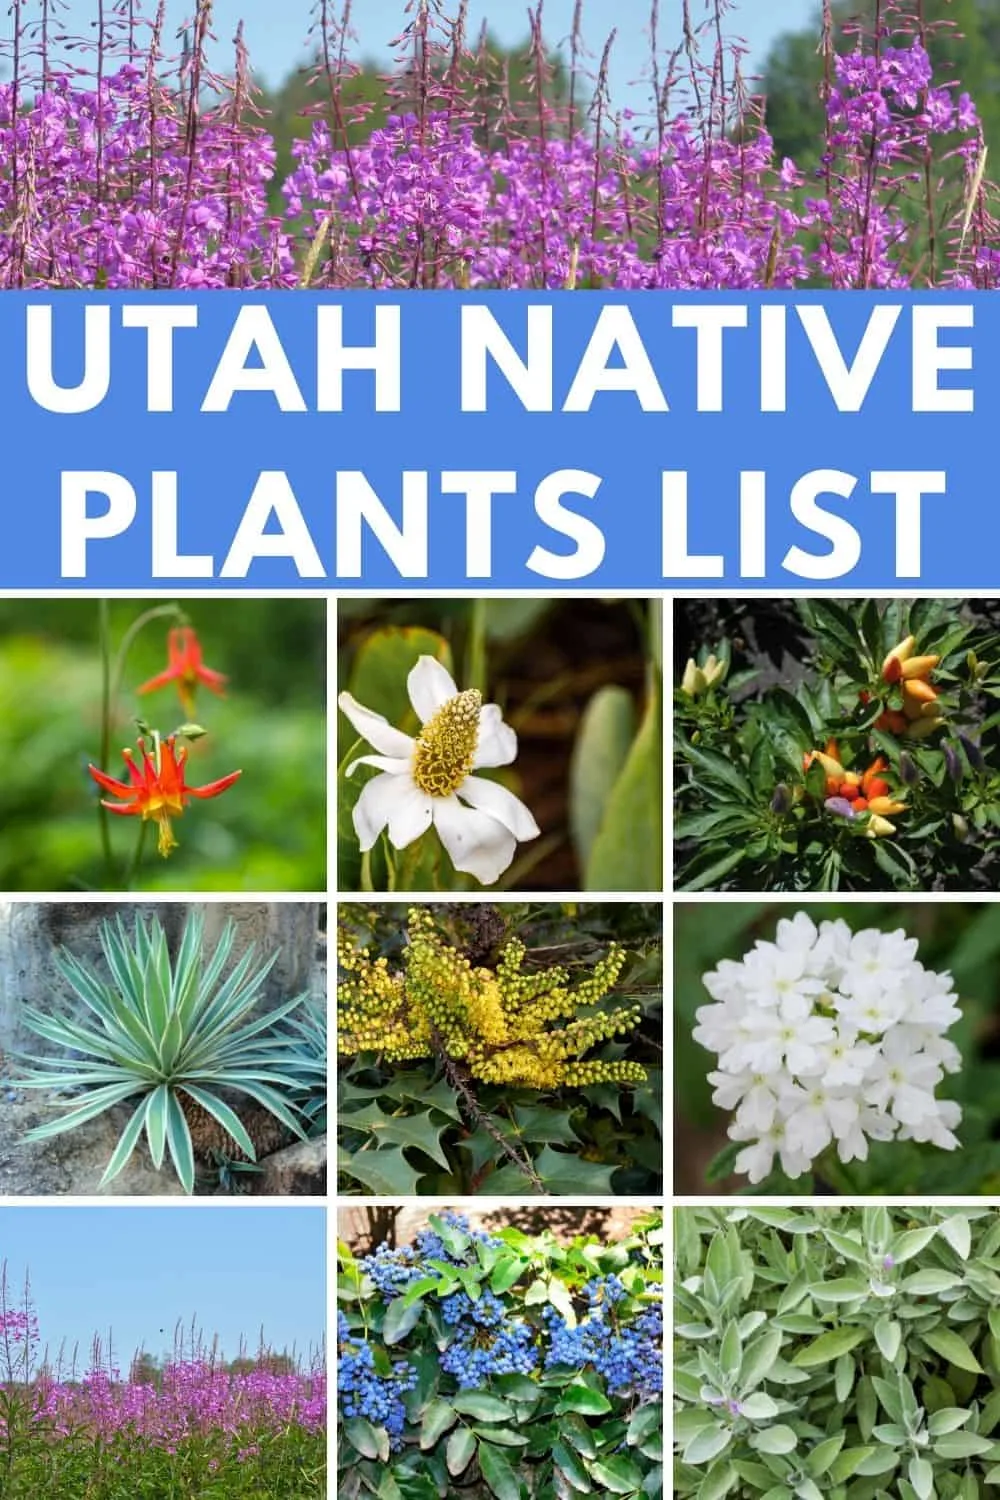 Utah native plants list